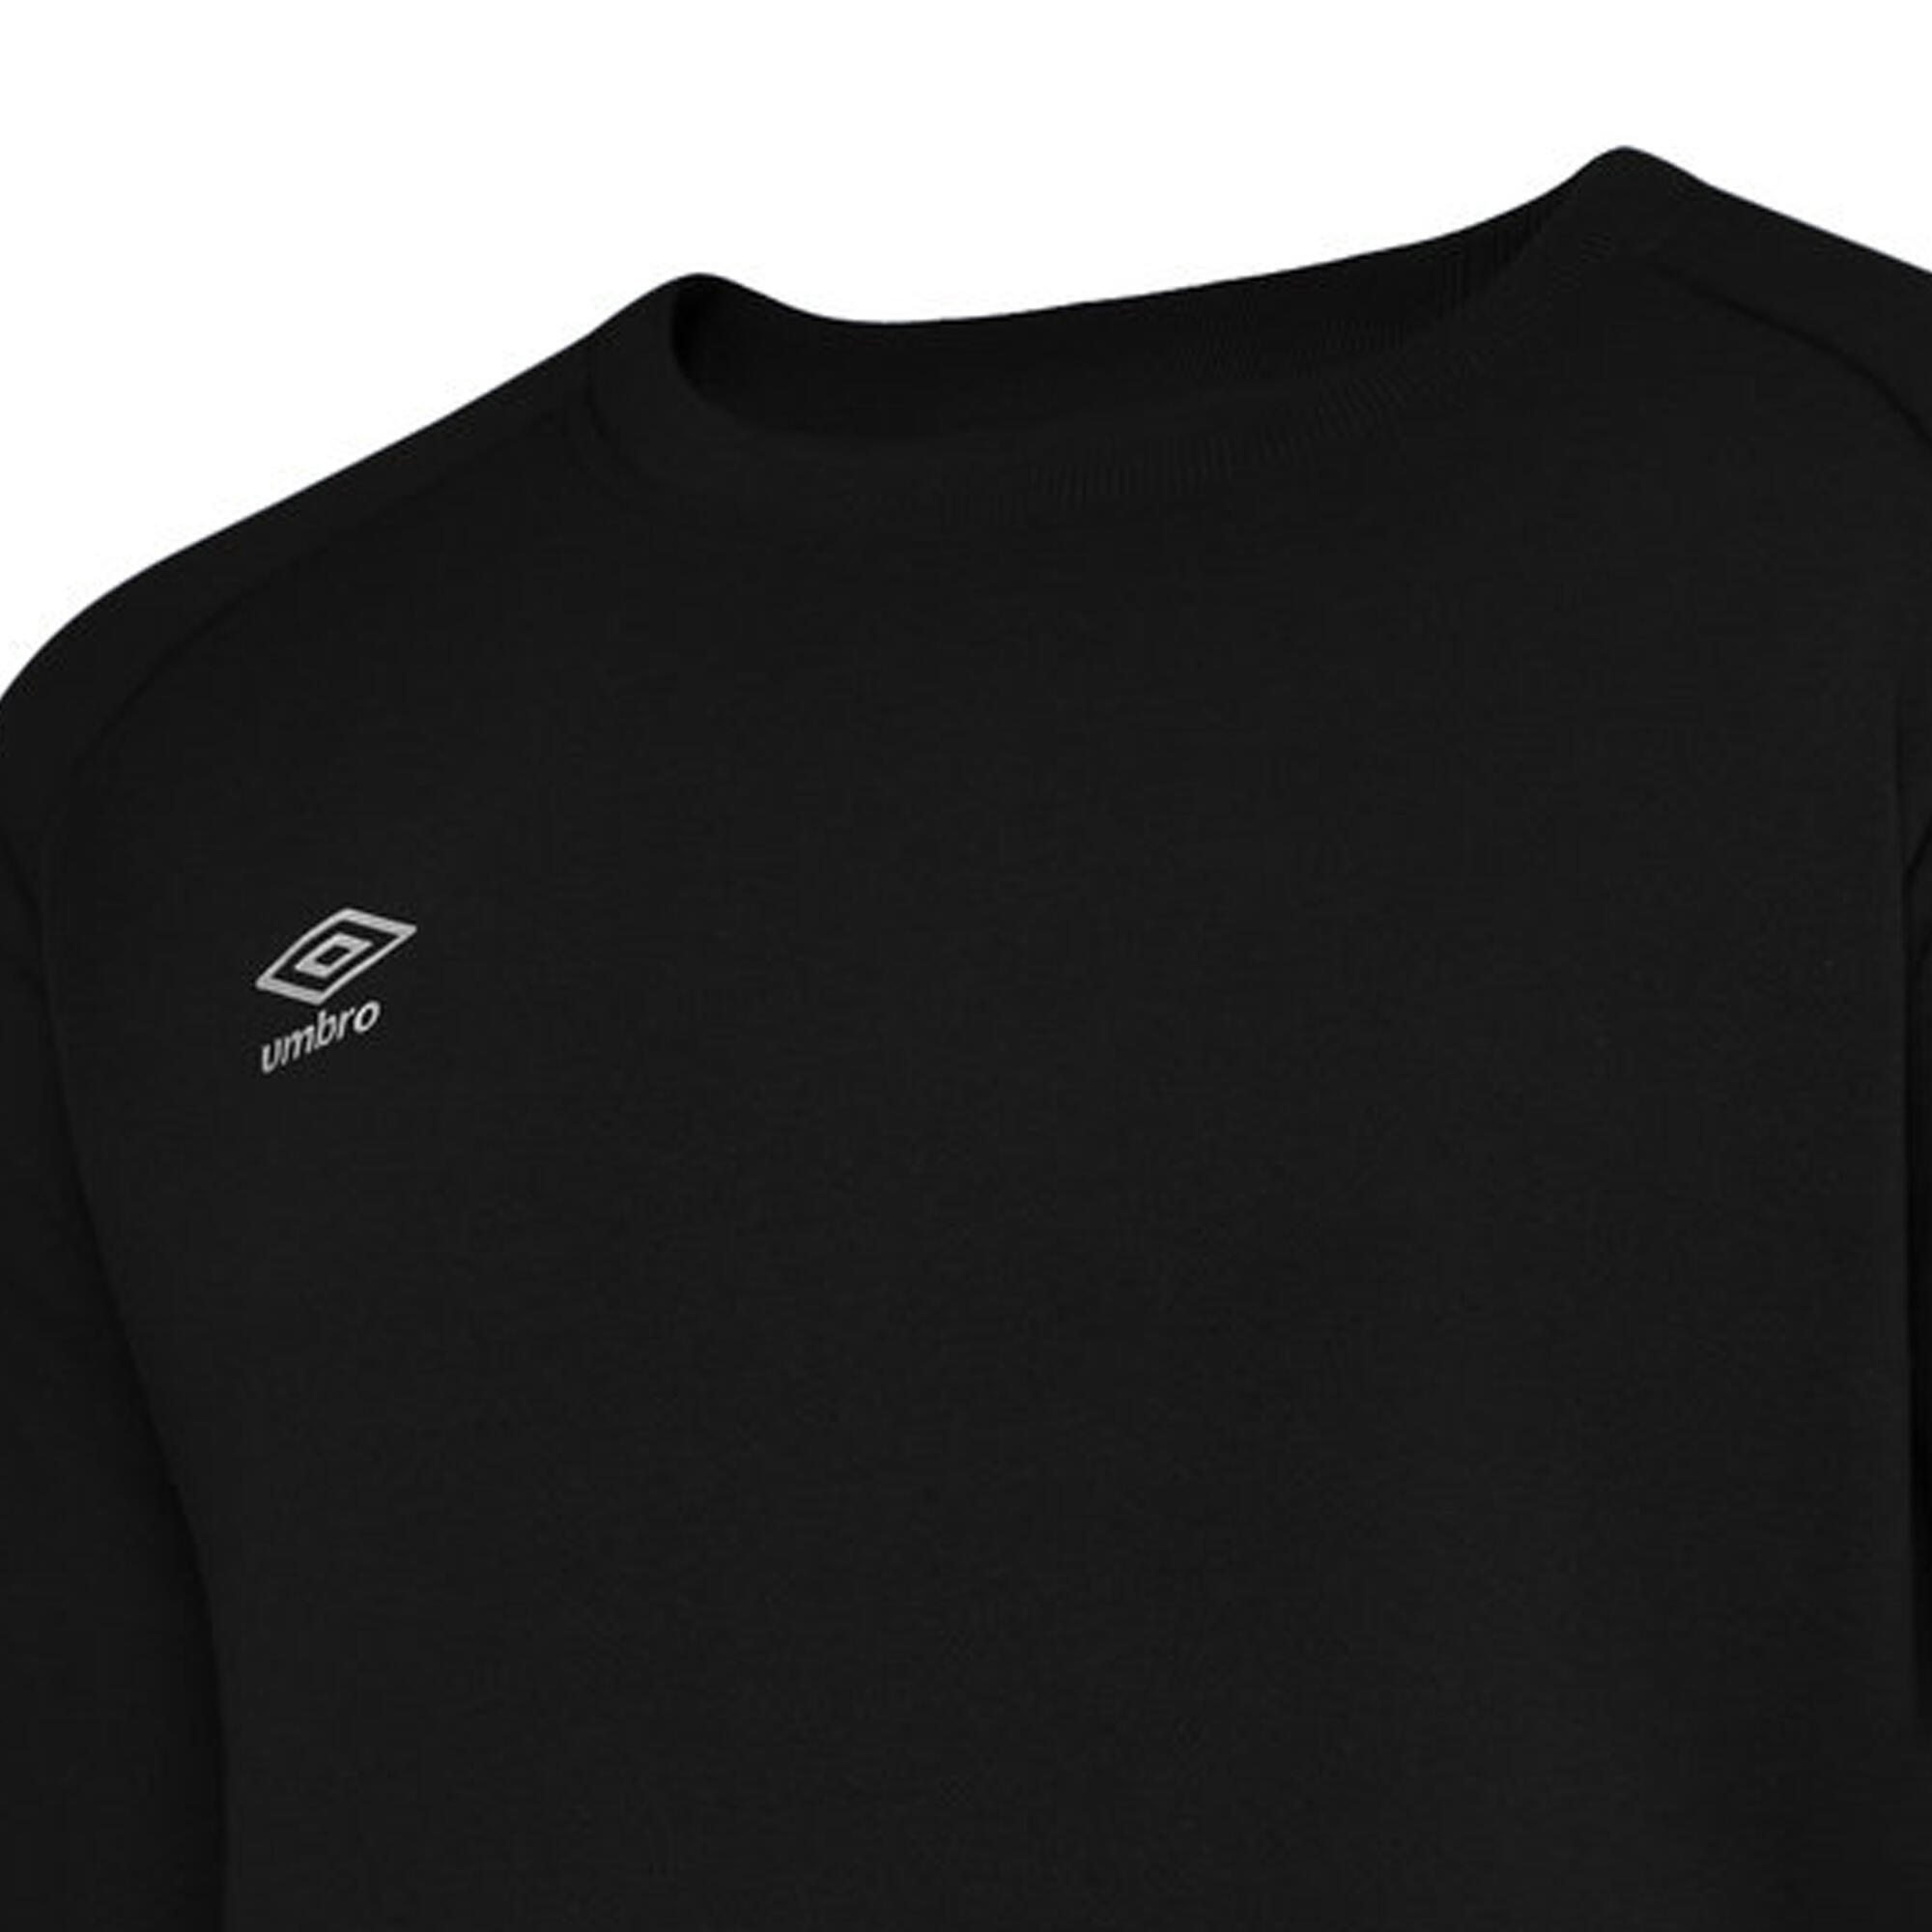 Childrens/Kids Club Leisure Sweatshirt (Black/White) 3/3